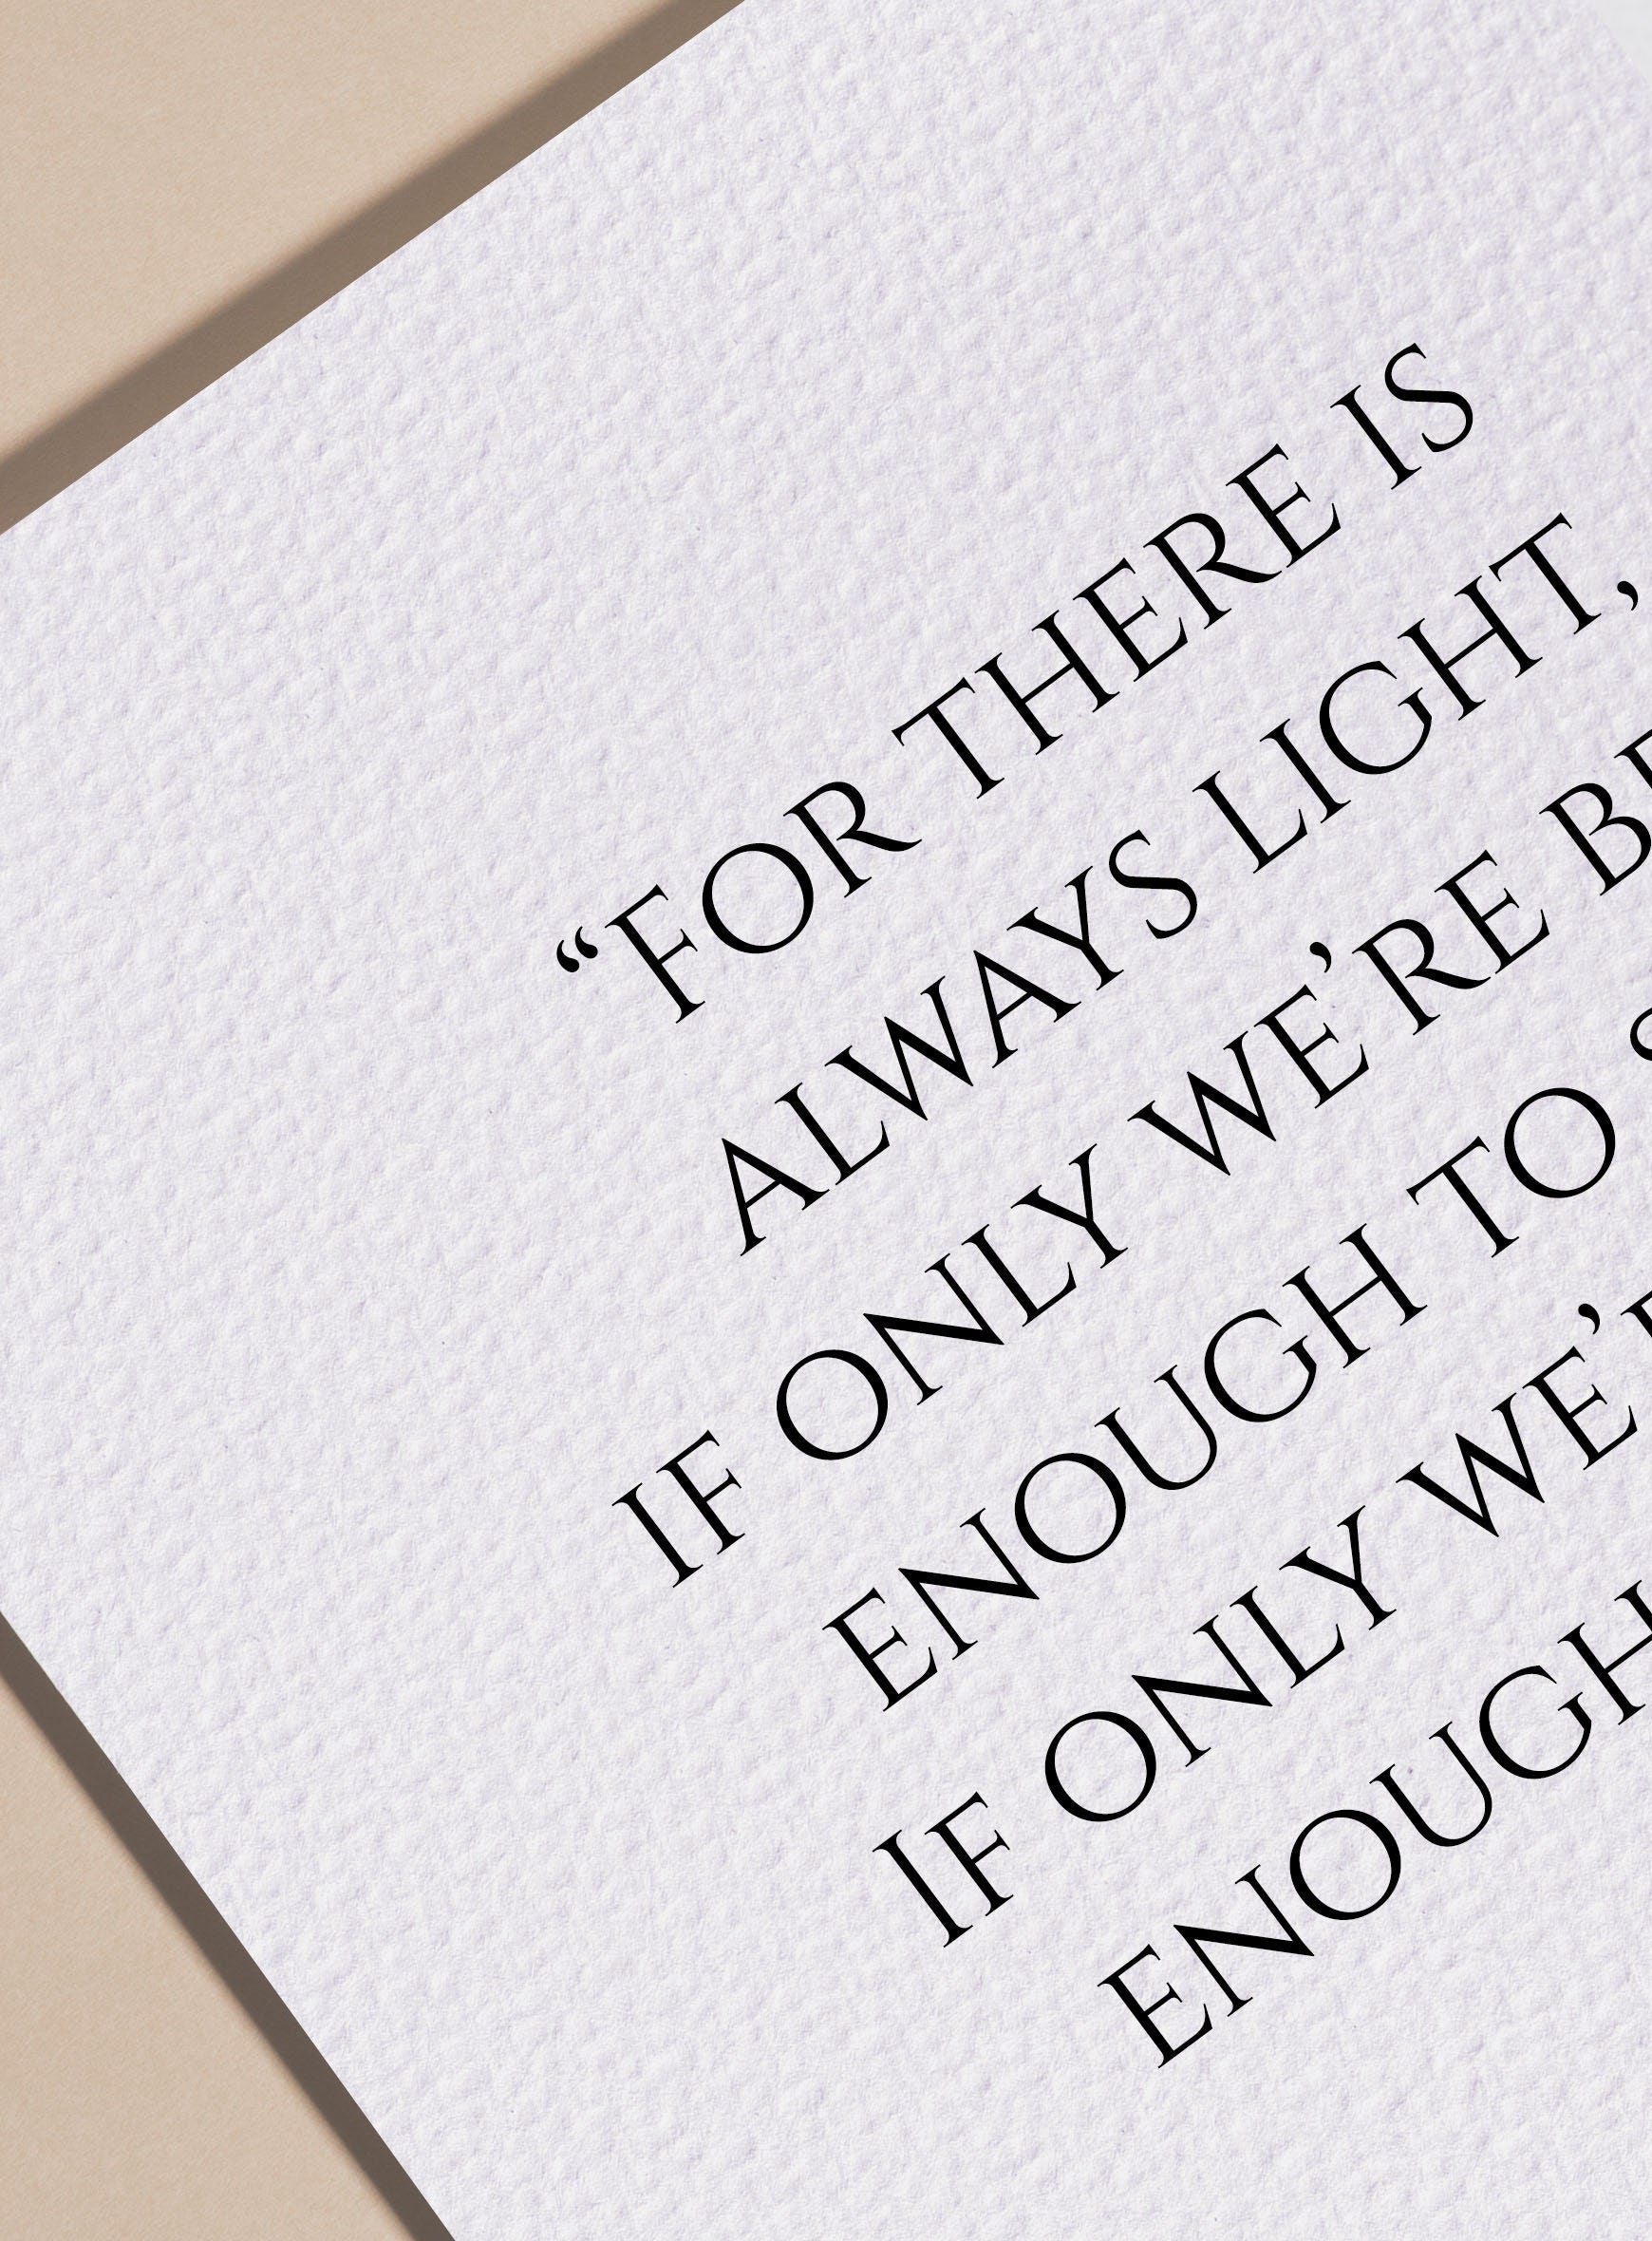 For there is always light Quote, Poem by Amanda Gorman, Joe Biden Inauguration Speech Poem Print, Inaugural poem print Book Quote Prints